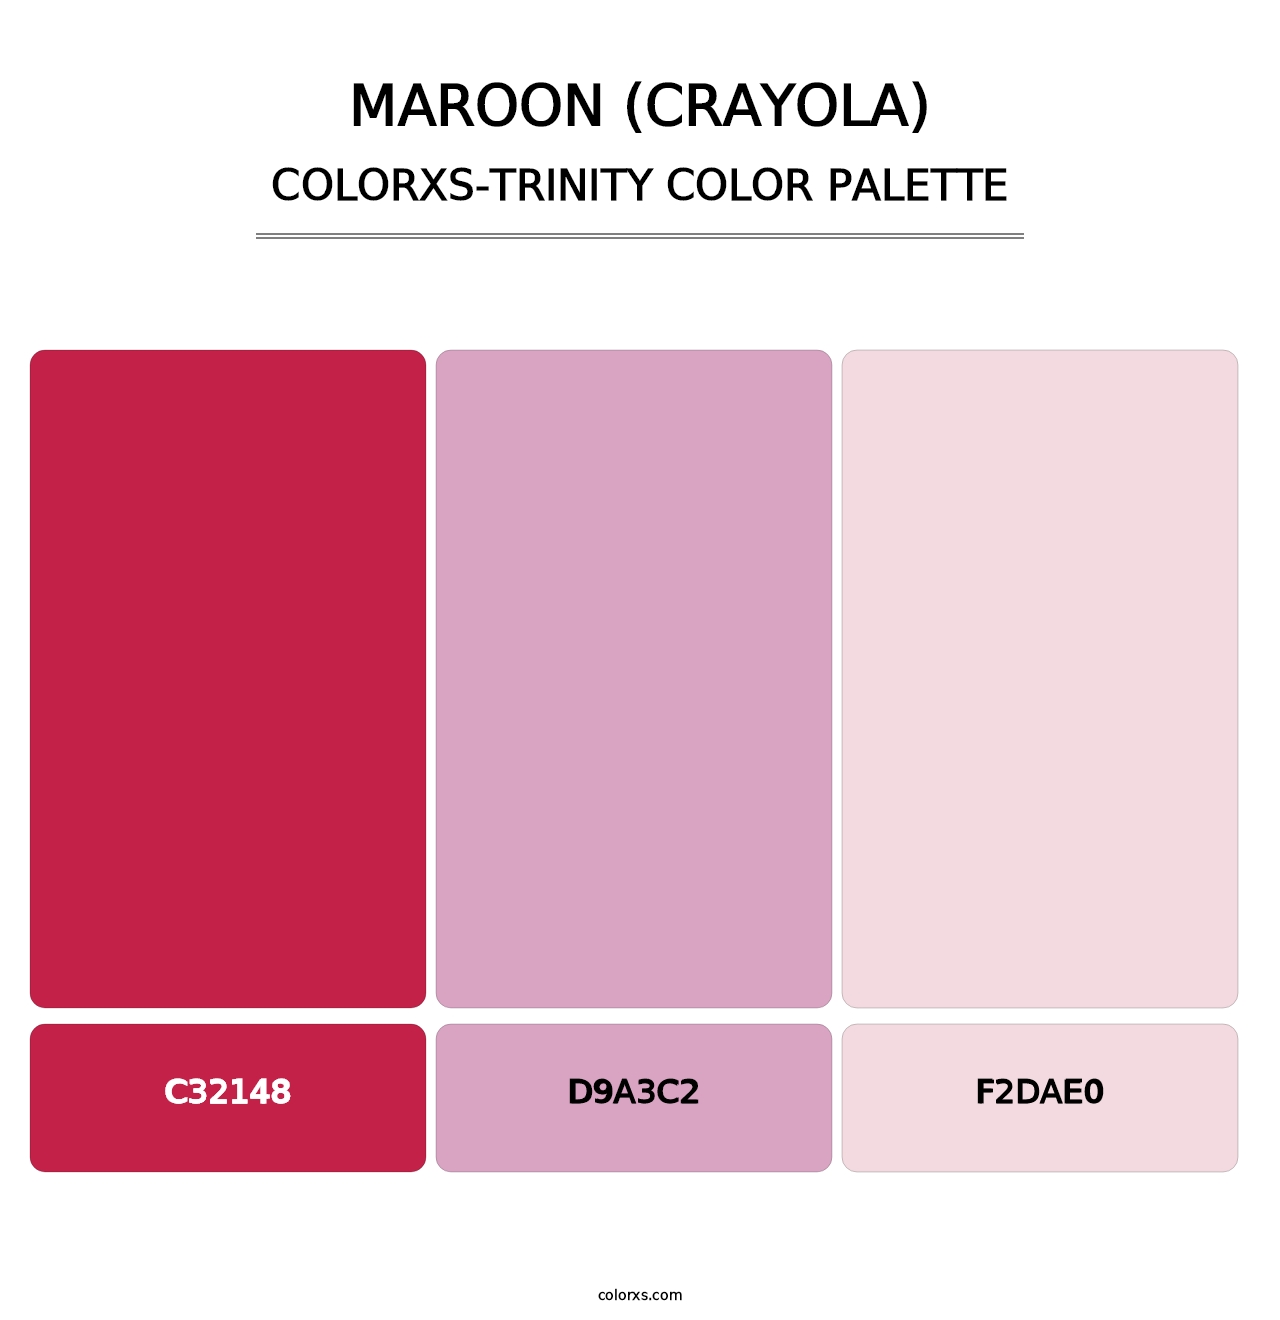 Maroon (Crayola) - Colorxs Trinity Palette